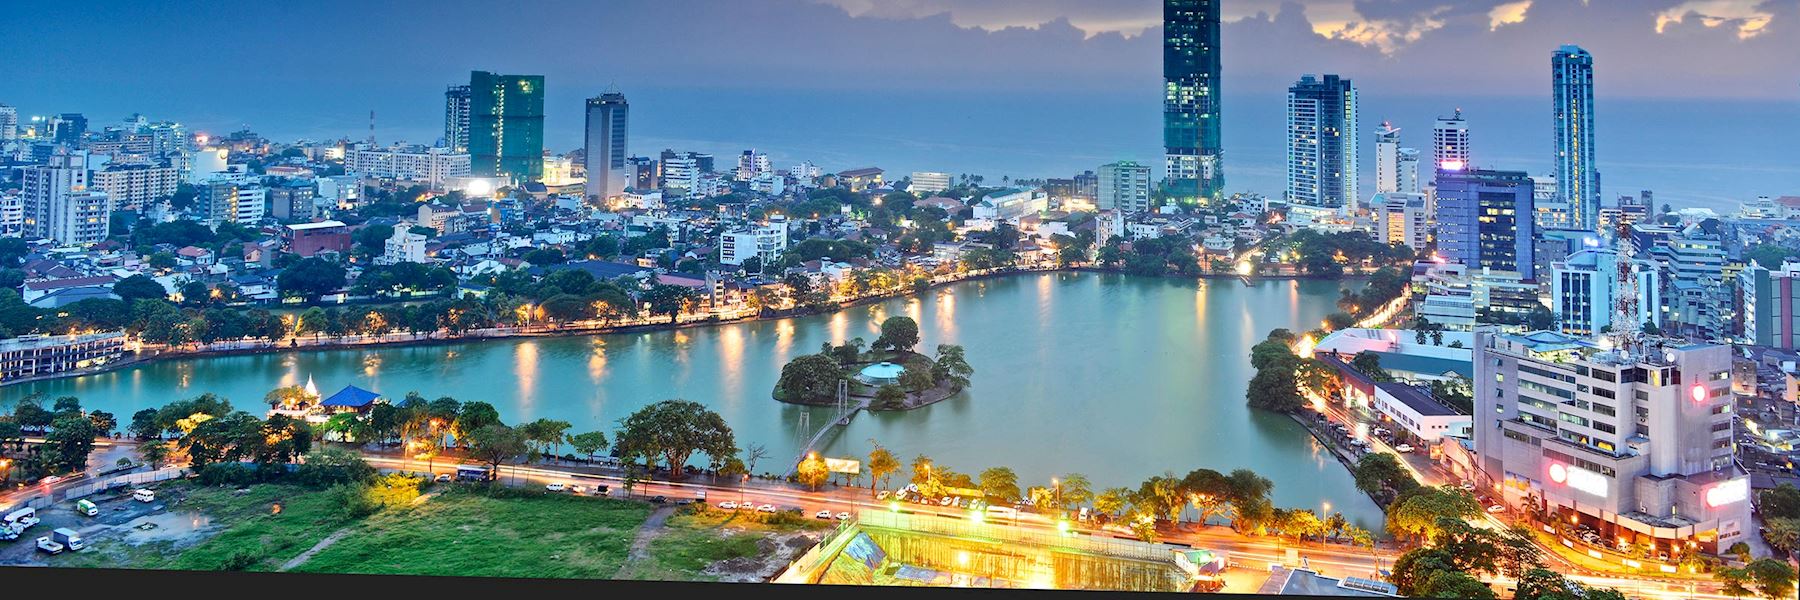 Visit Colombo on a trip to Sri Lanka | Audley Travel